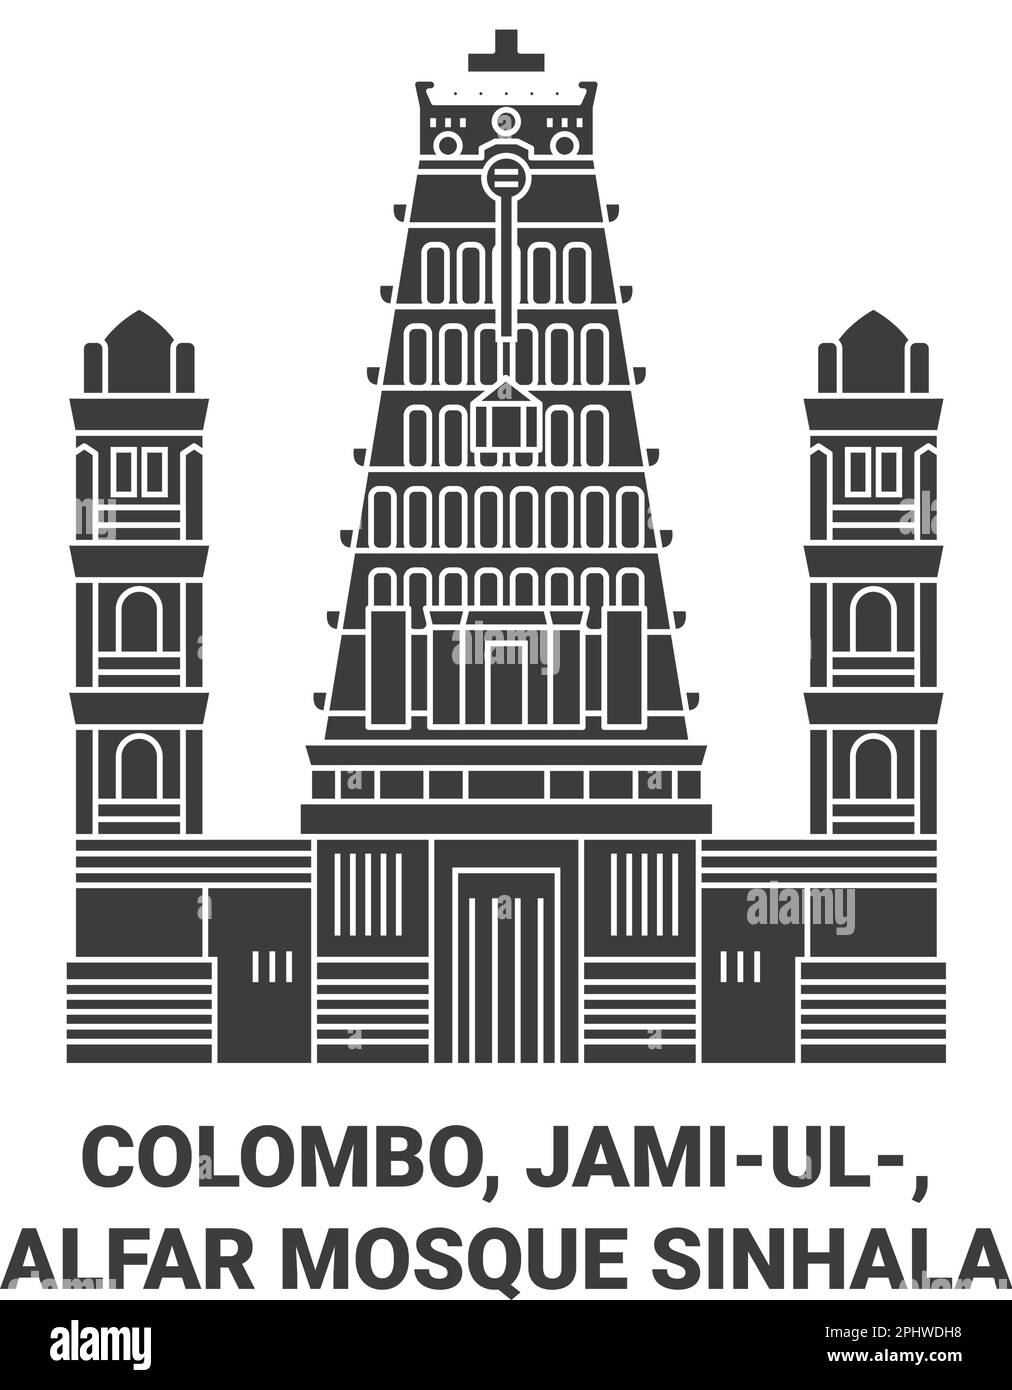 Sri Lanka, Colombo, Jamiul, Alfar Mosque Sinhala travel landmark vector illustration Stock Vector